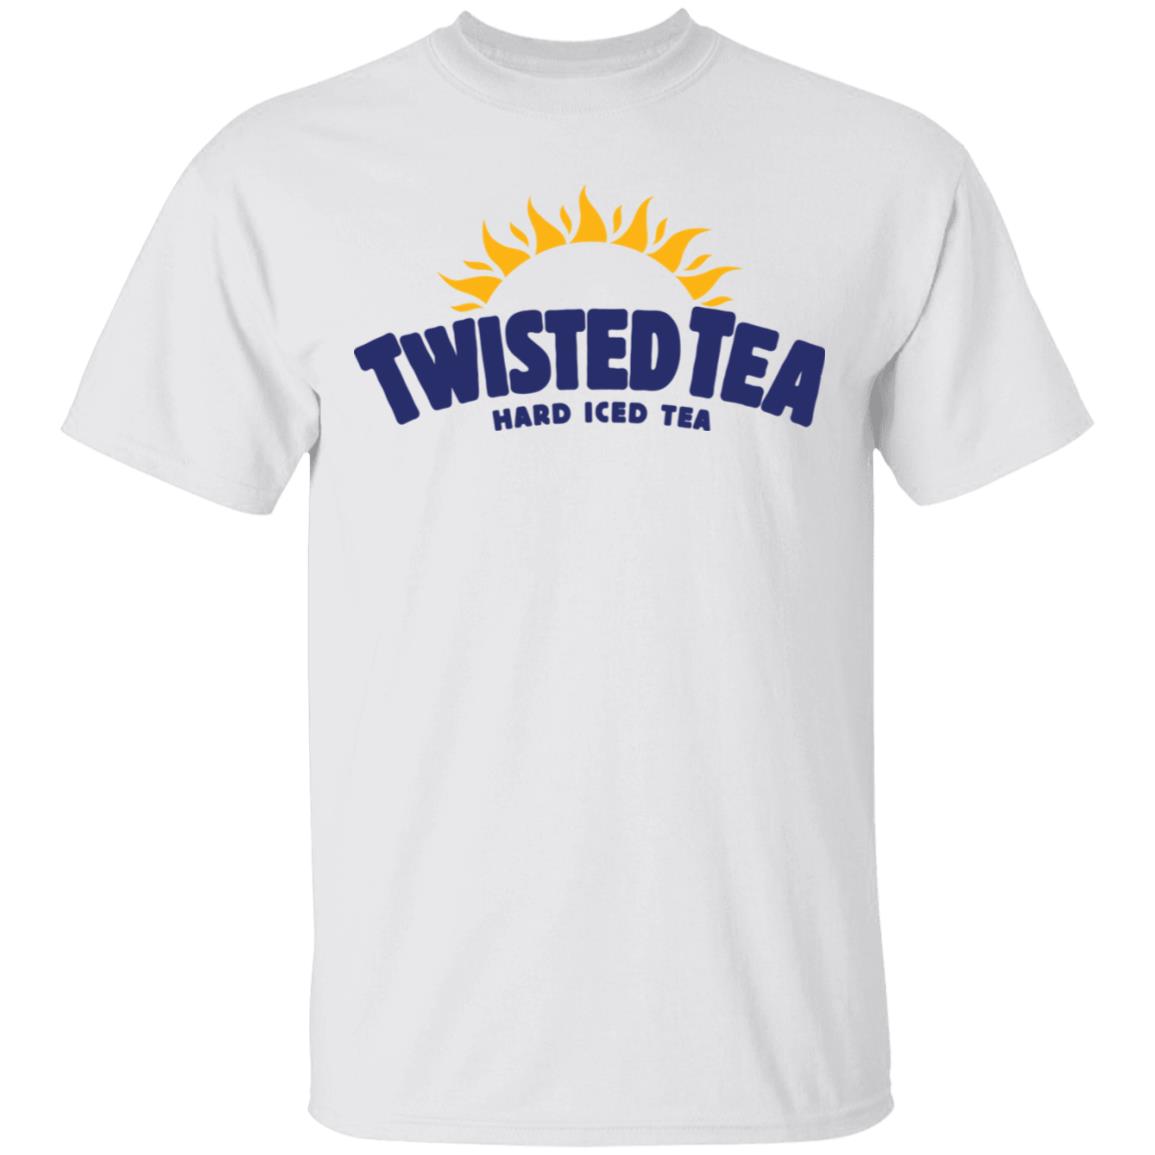 aangenaam paspoort Grootste Twisted tea hard iced tea shirt - Bucktee.com